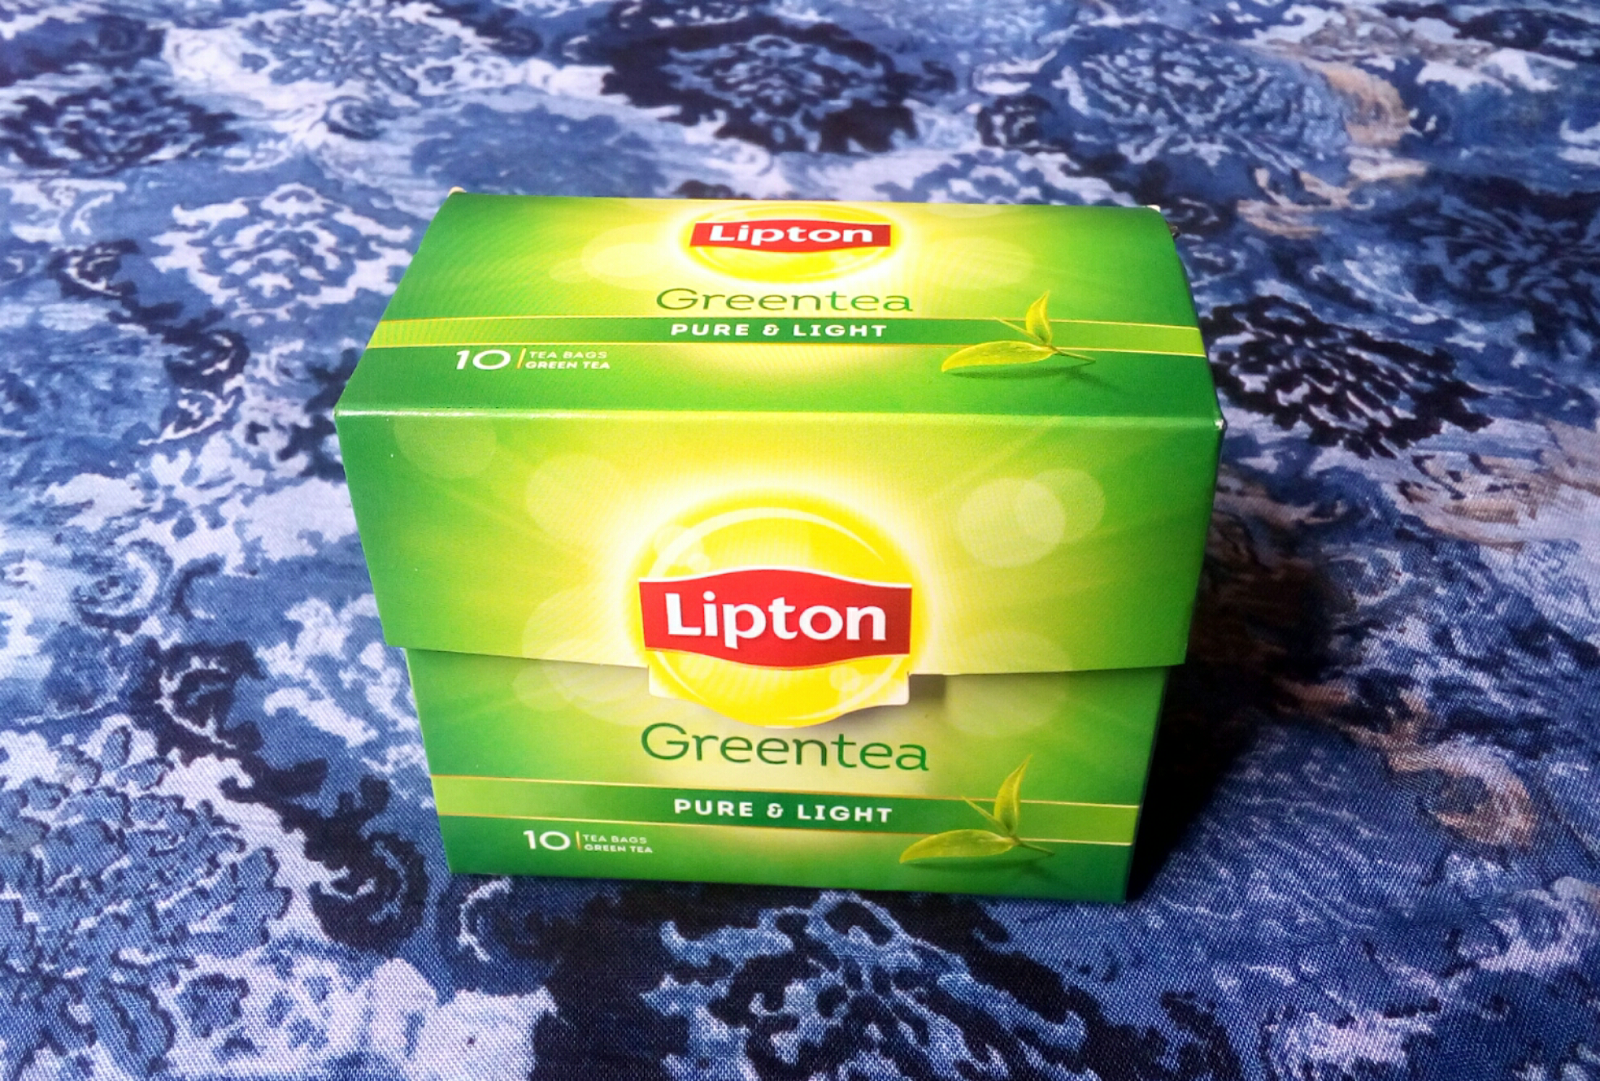 Lipton Tea Sampler